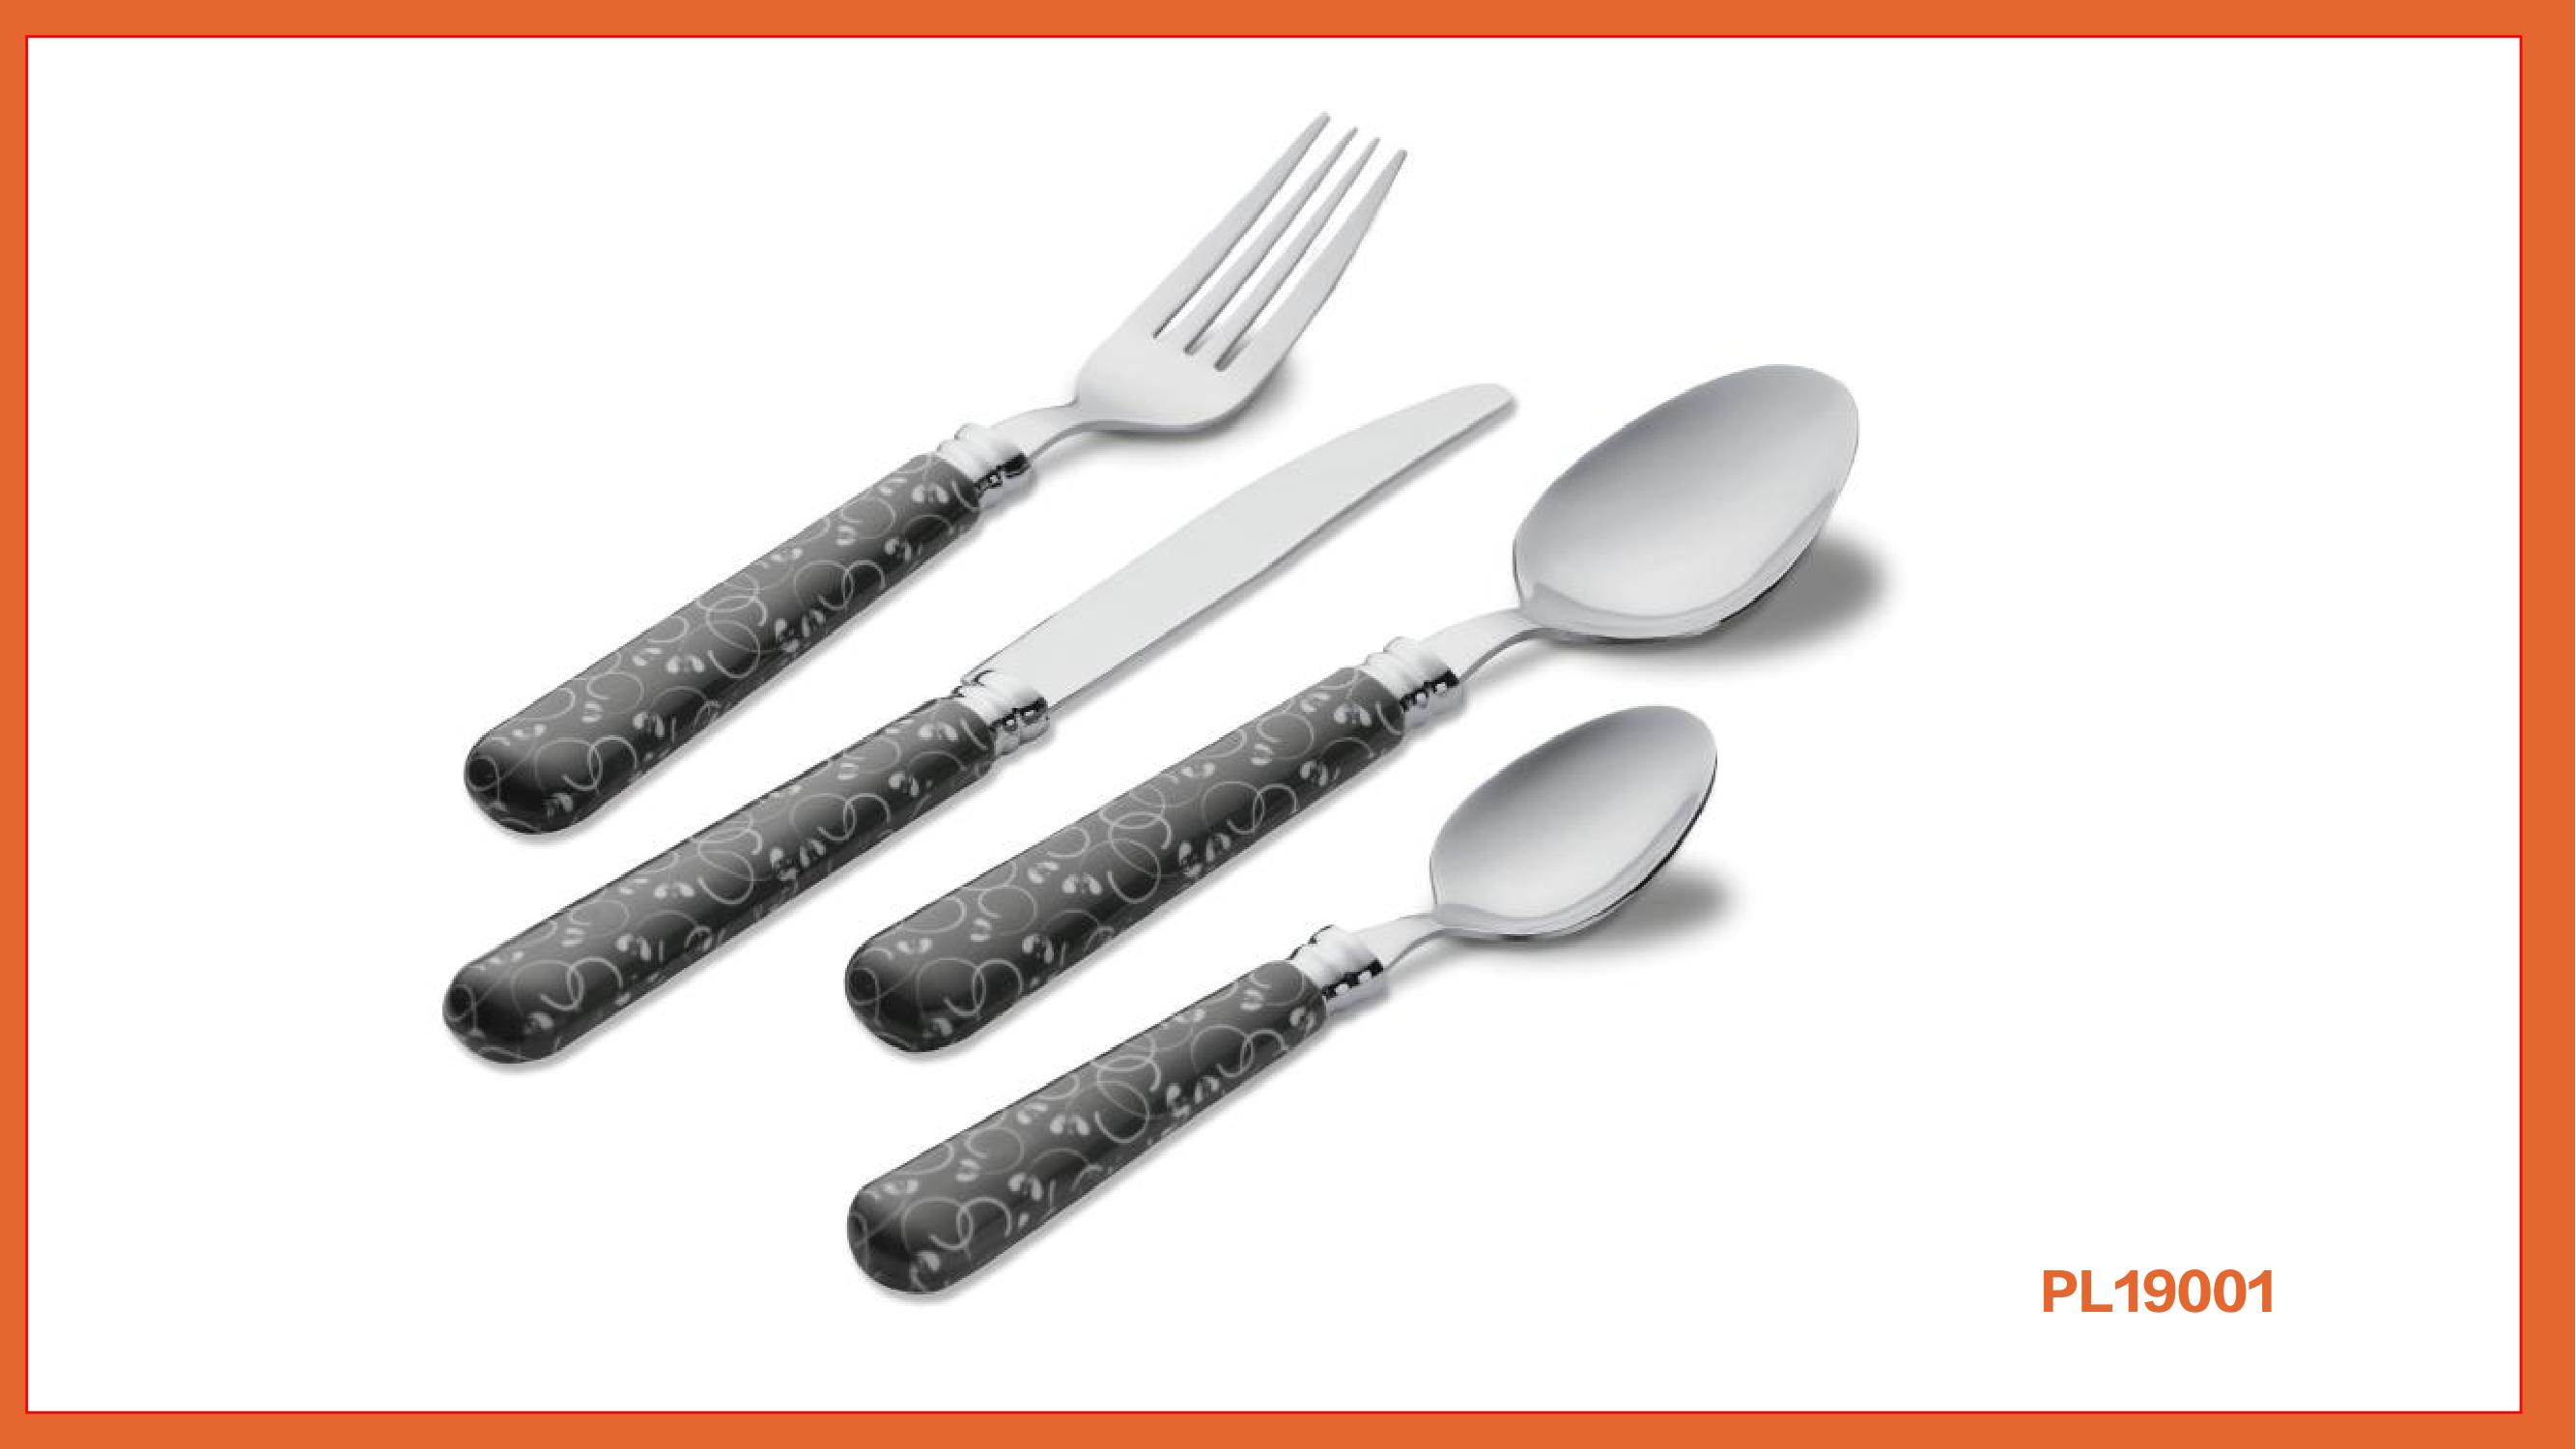 catalogue of plastic handle cutlery_16.jpg